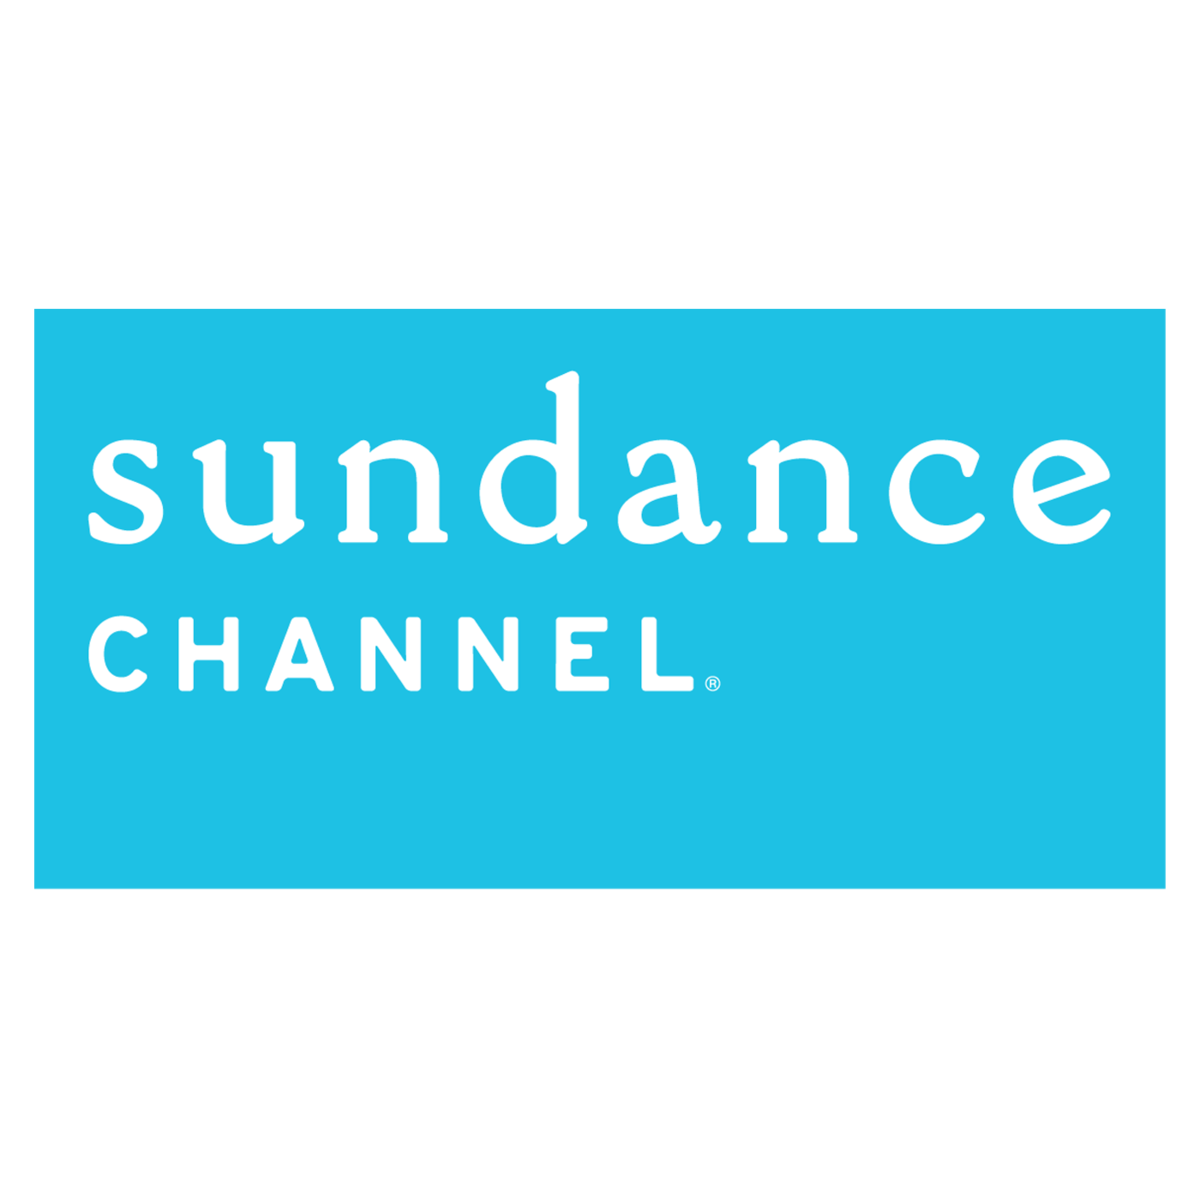 Sundance Channel Logo - Square.png